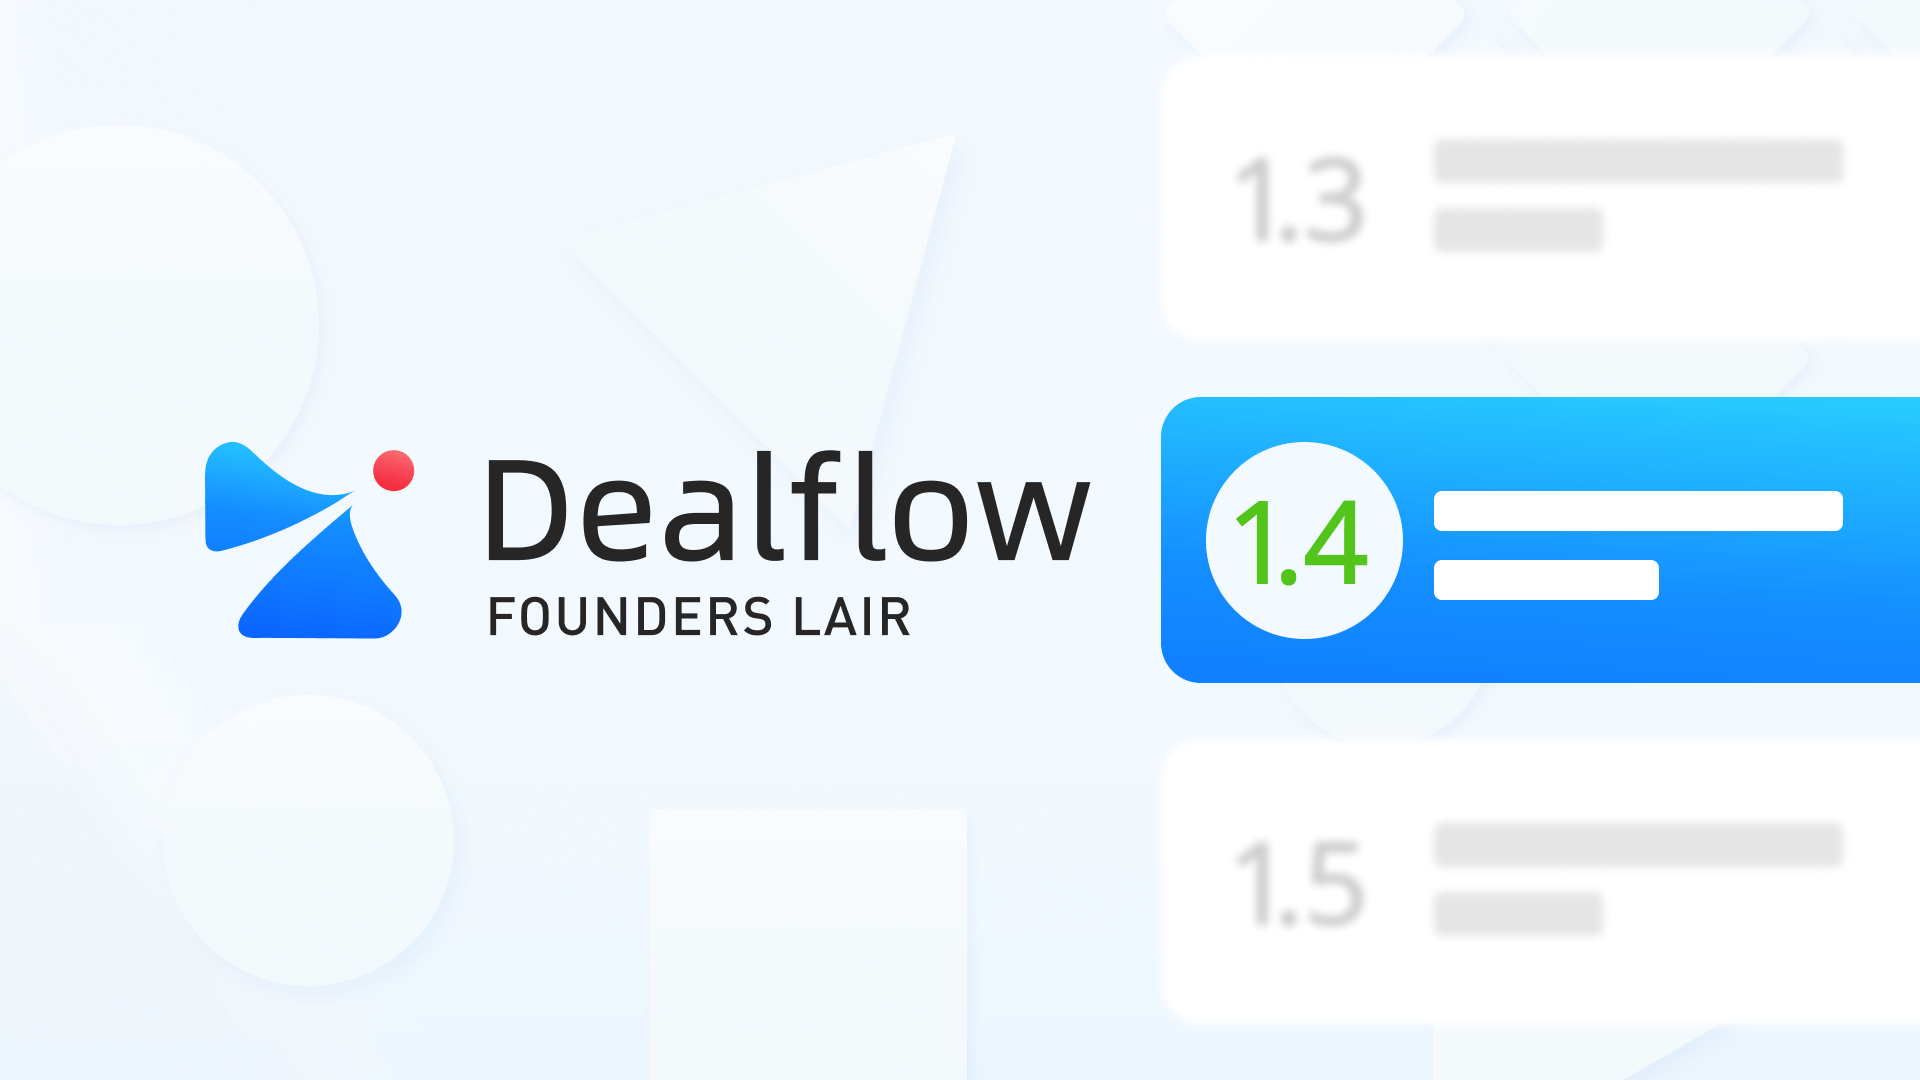 Dealflow 1.4 featured image